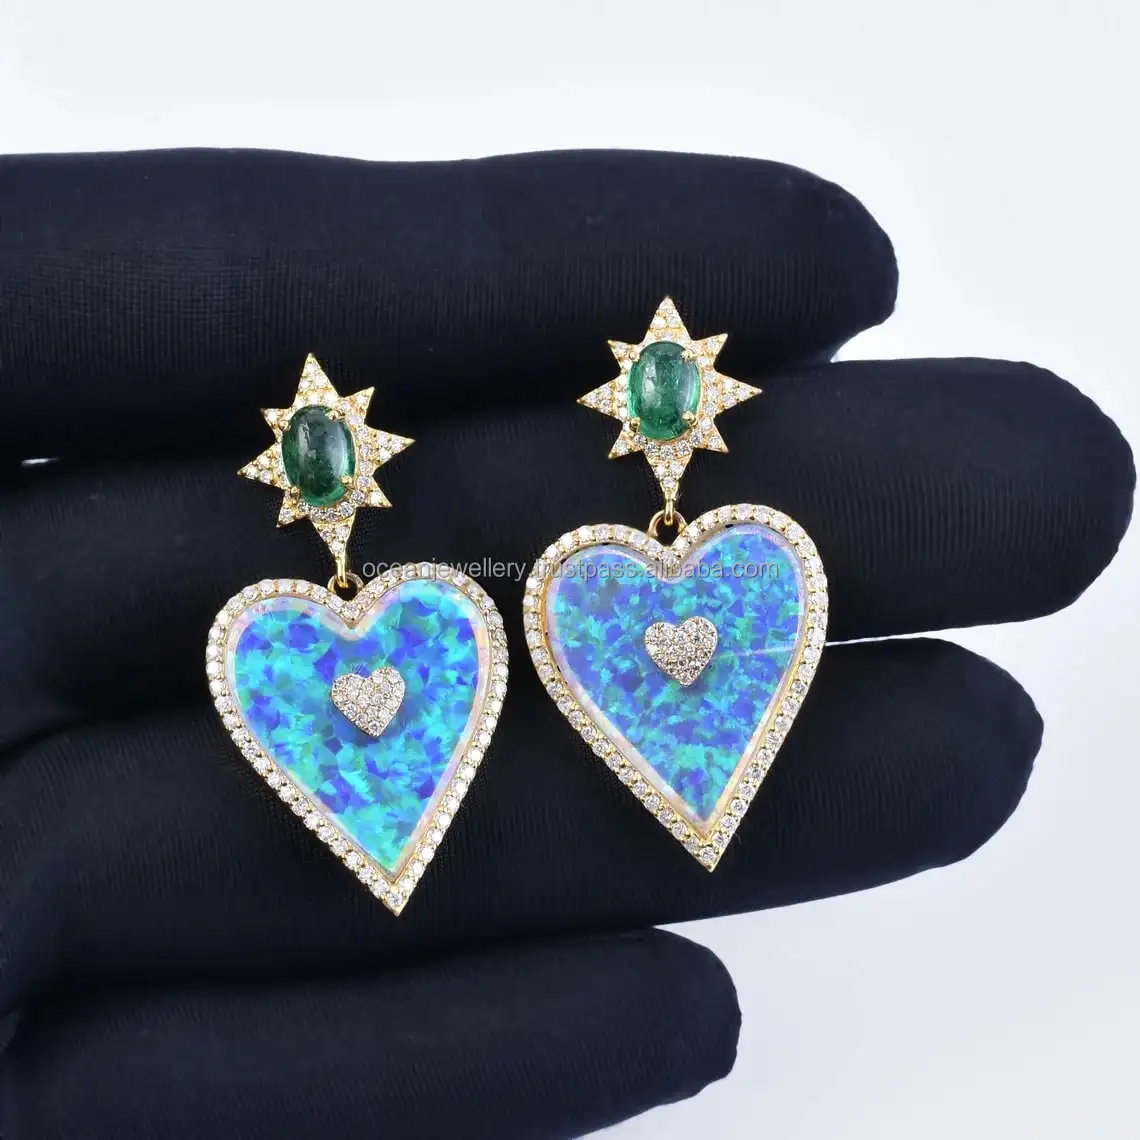 Wholesale Unique 18k Gold Heart Shape Classy Diamond Drop Earring For Women| Natural Gemstones Earring